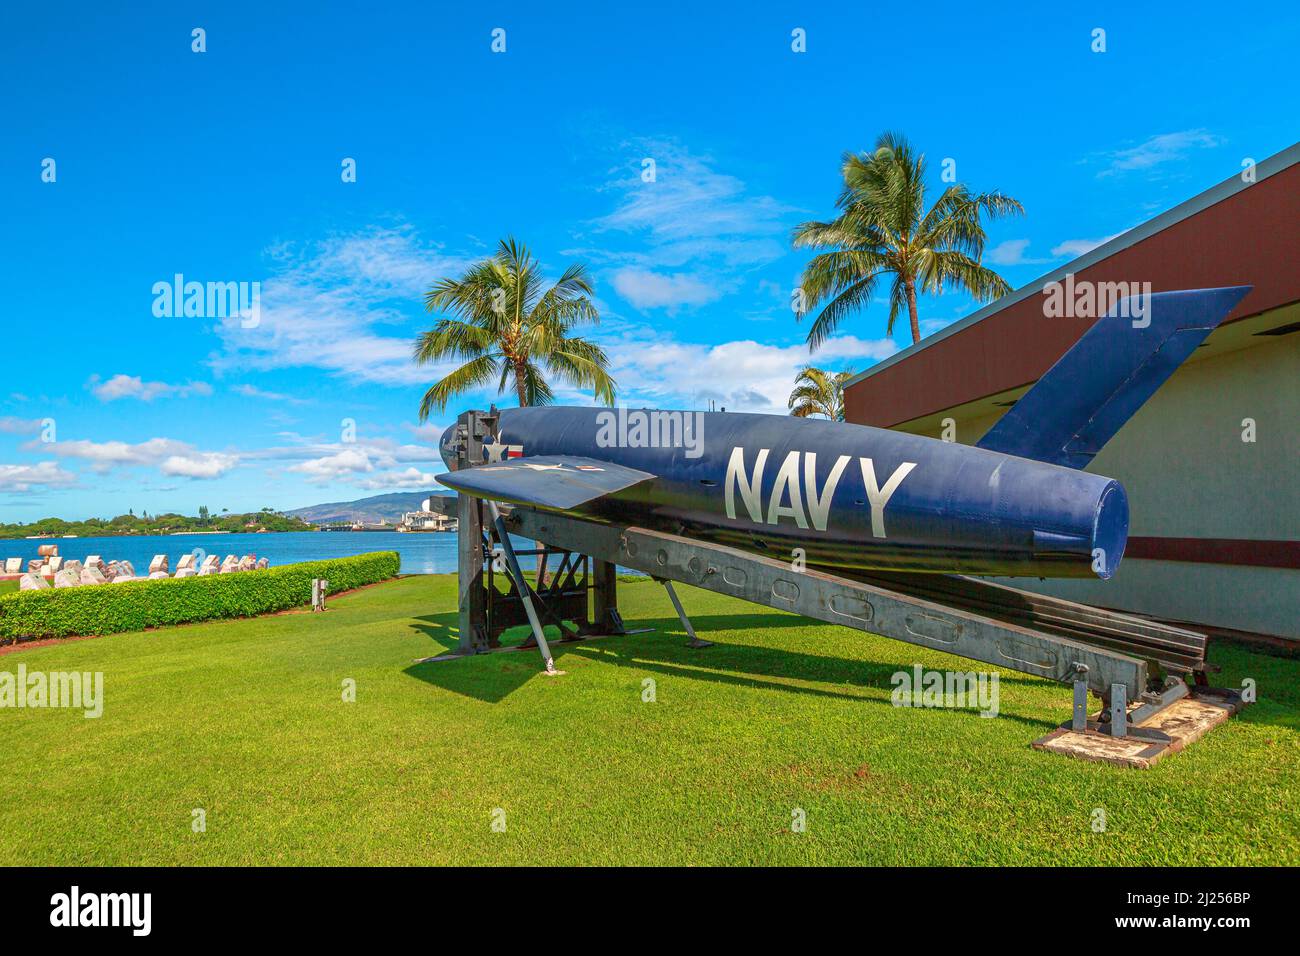 Pearl Harbor, Honolulu, Oahu, Hawaii, Stati Uniti - Agosto 2016: SSM N-8 Regulus 1 missile da crociera nucleare della guerra fredda 1950s-1960s. Situato in Foto Stock